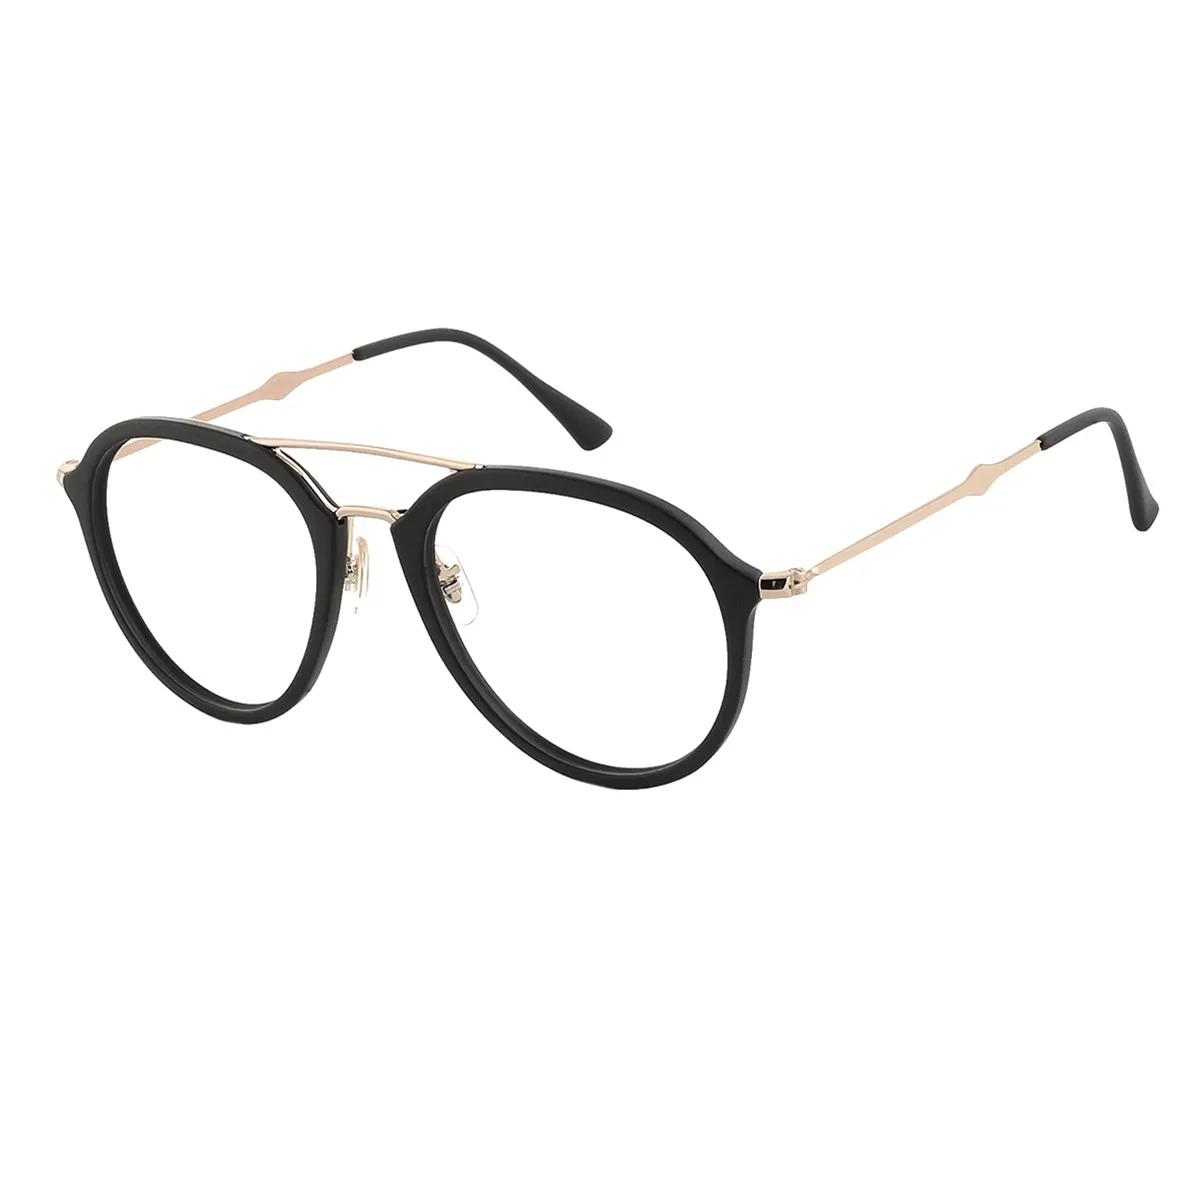 Fashion Aviator Tortoiseshell Glasses for Men & Women